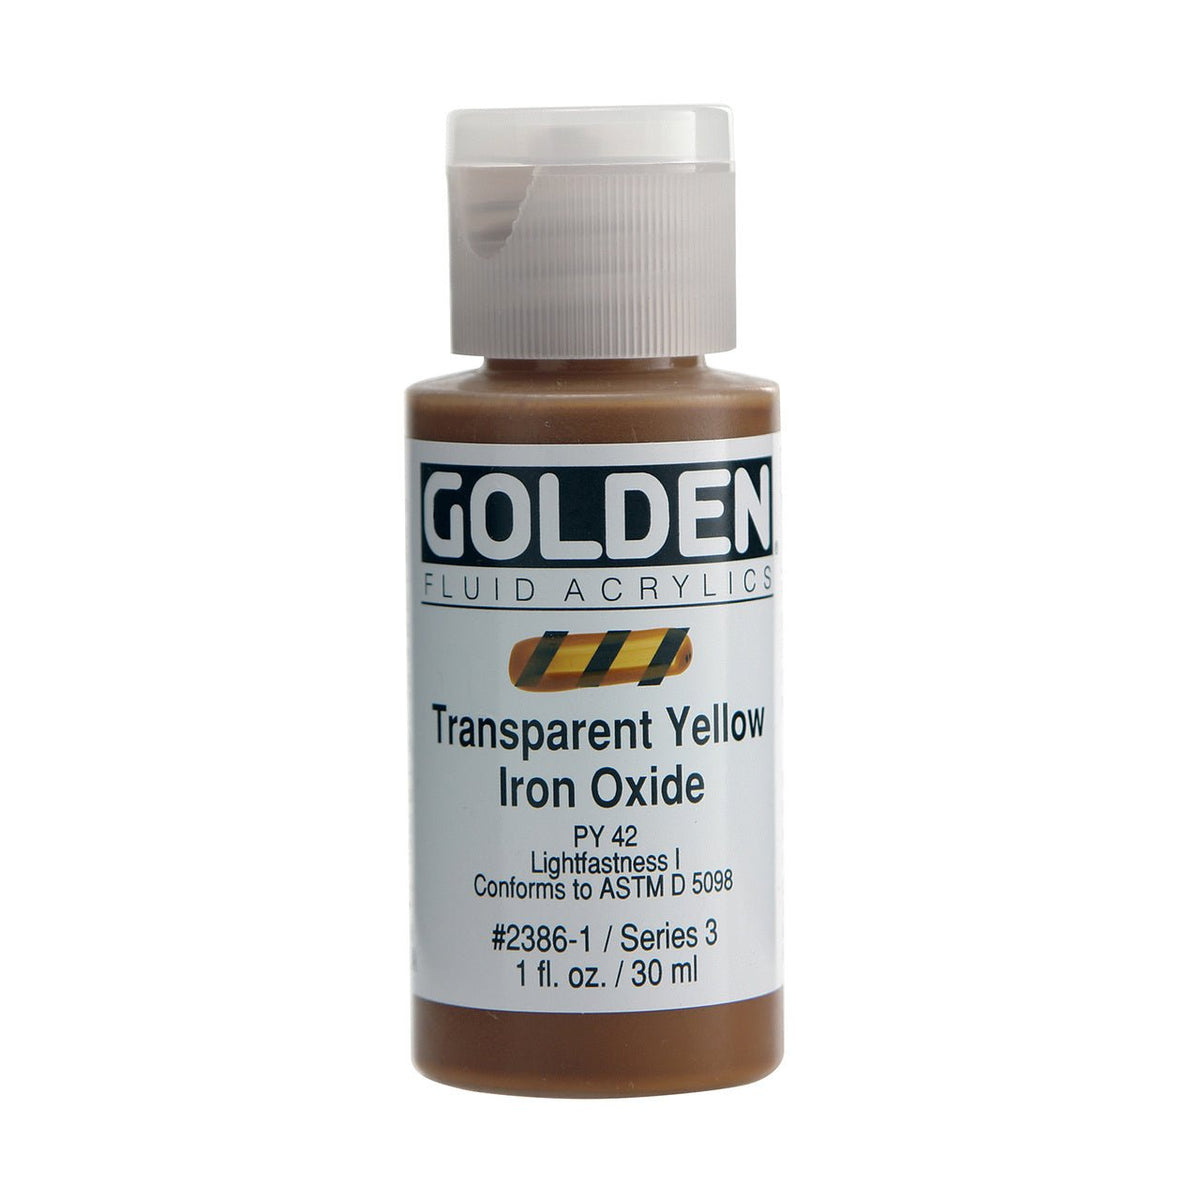 Golden Fluid Acrylic Transparent Yellow iron Oxide 1 oz - merriartist.com